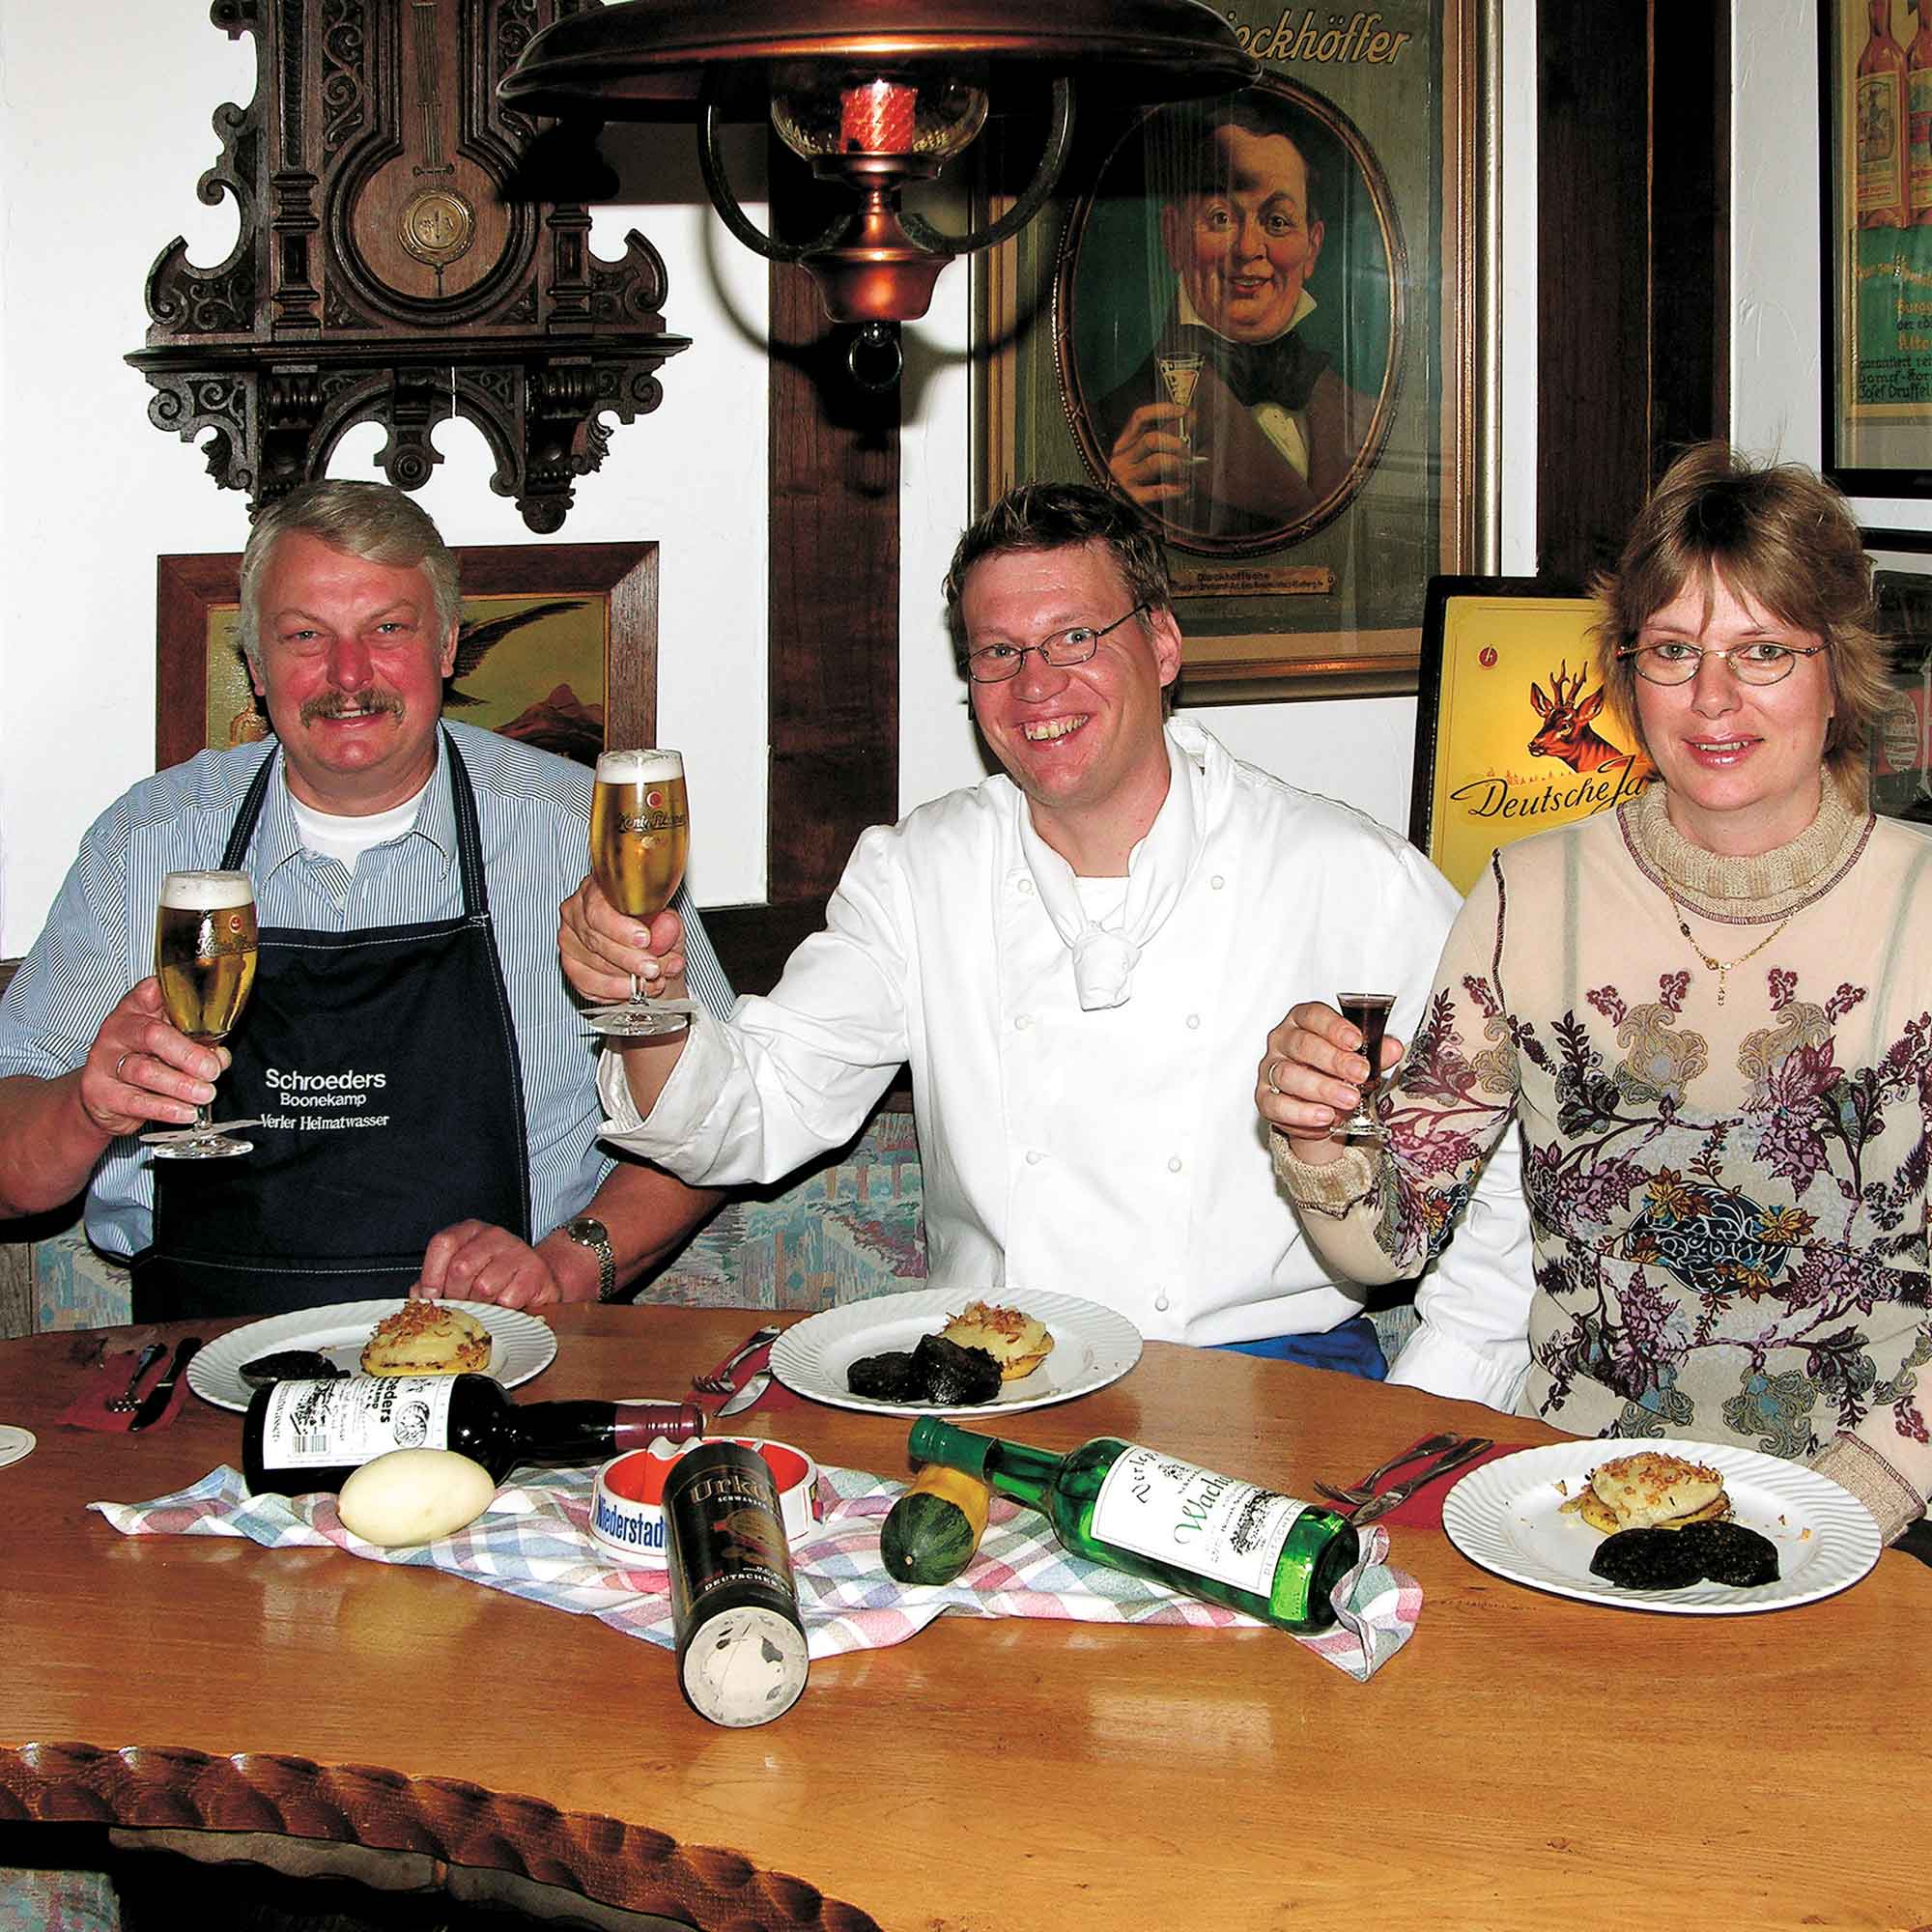 Anzeige: Altdeutscher Hof Beckord, Gütersloh, Kochduell »Wir kochen den Garten leer« mit Bruno Schröder, 2004